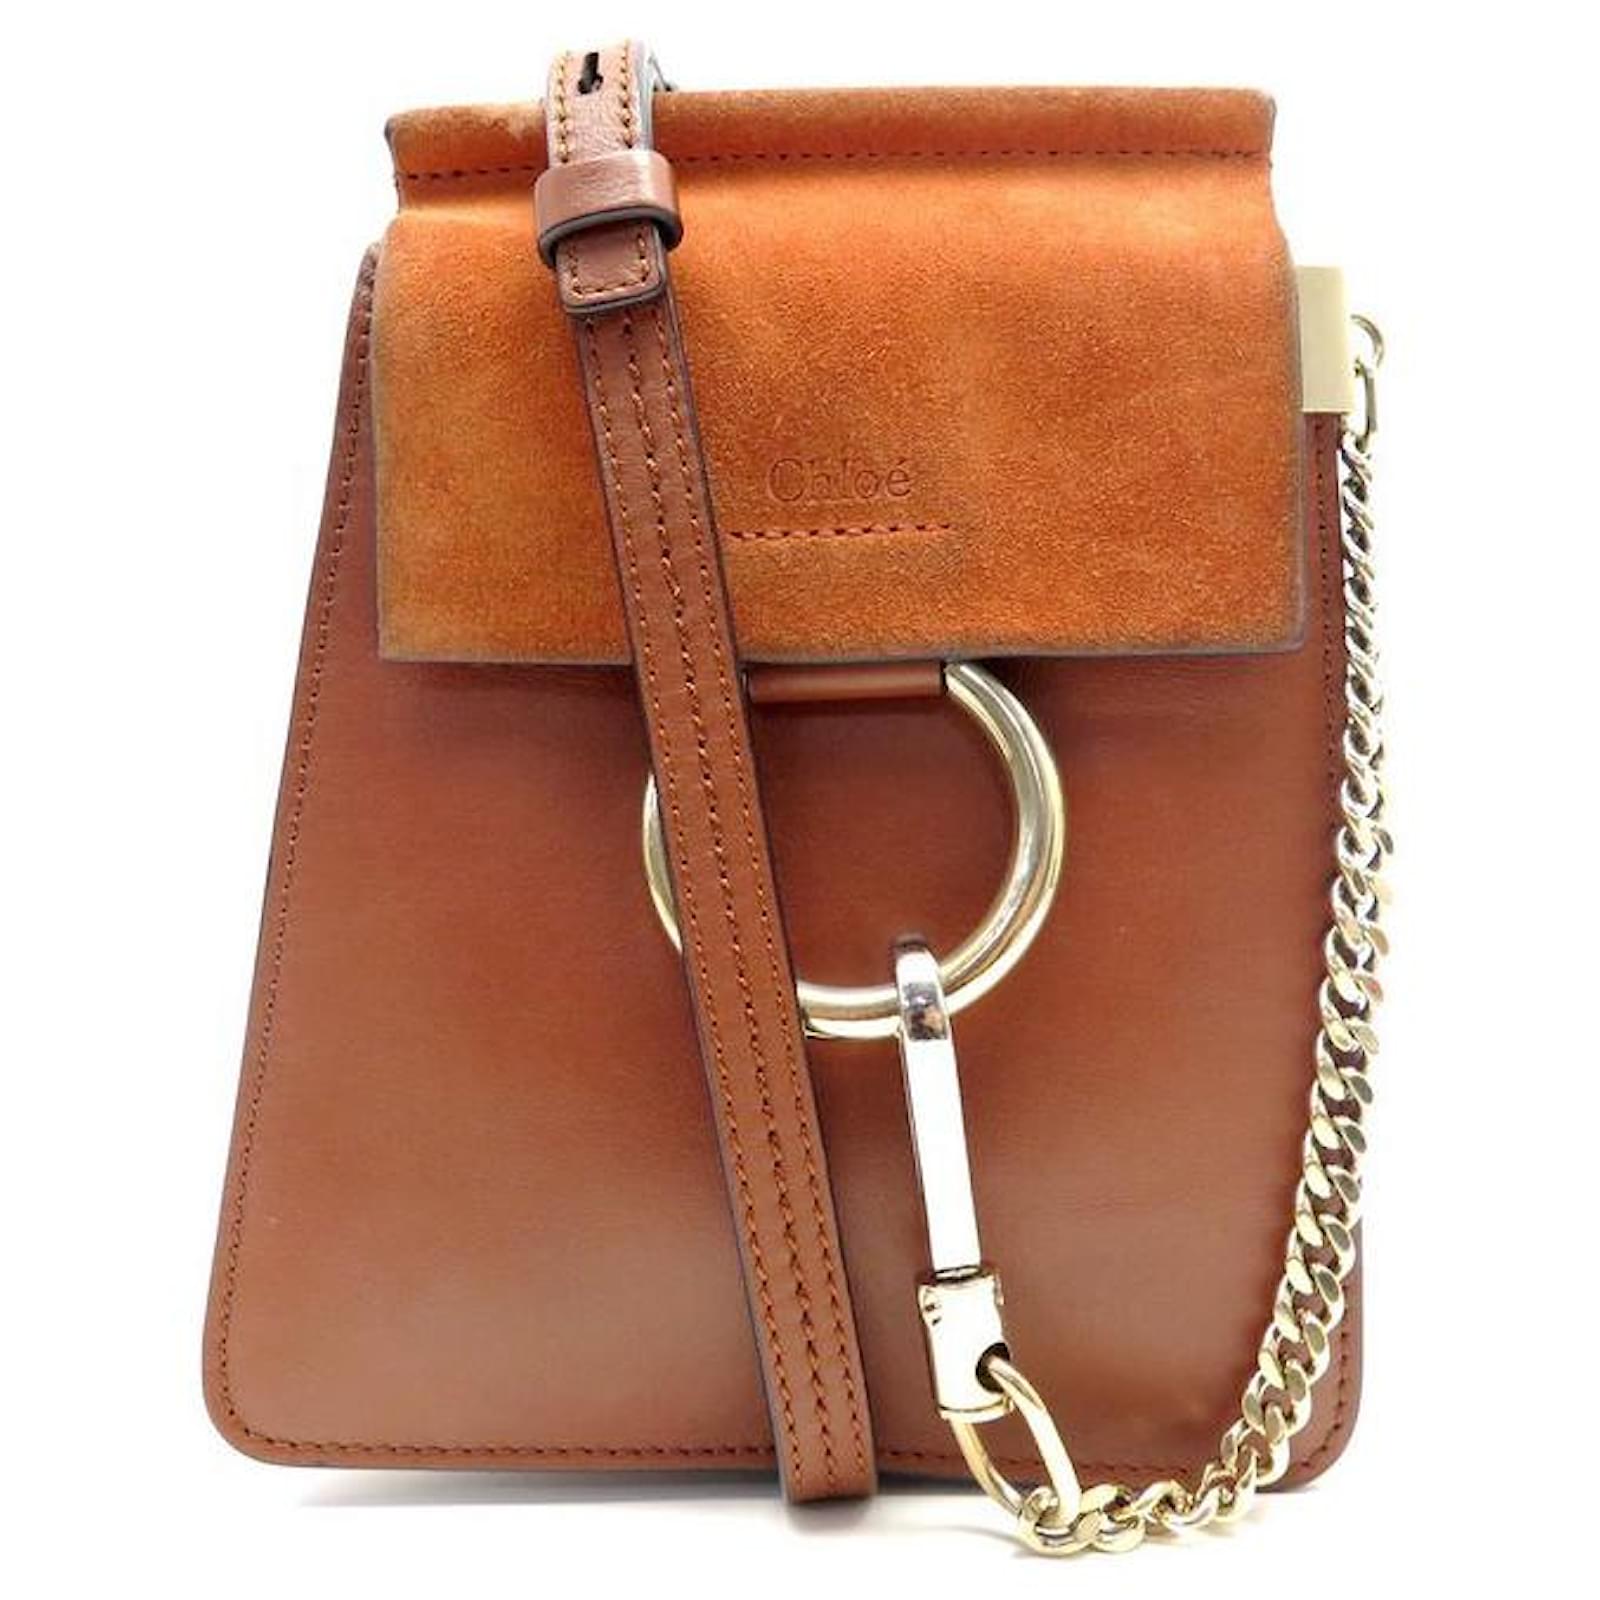 CHLOÉ Small Faye Leather Crossbody Bag